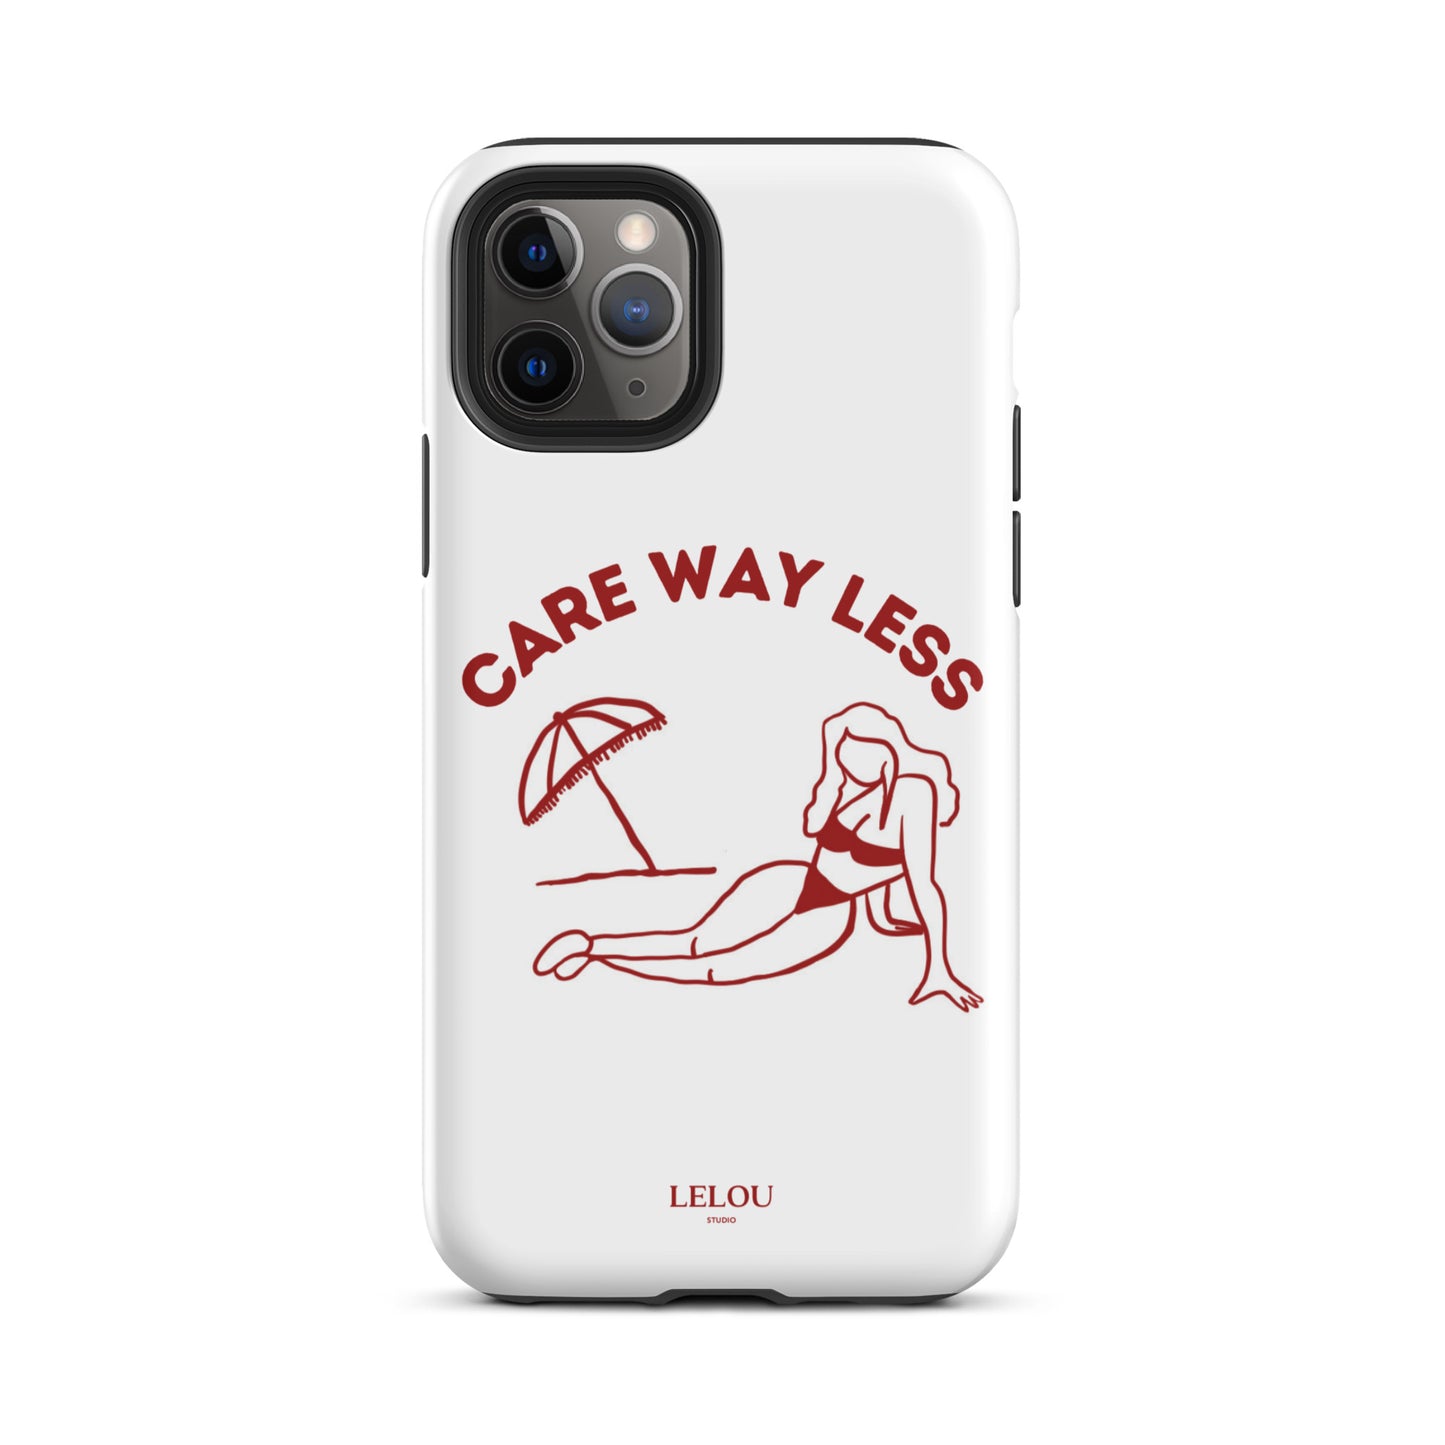 Care way less